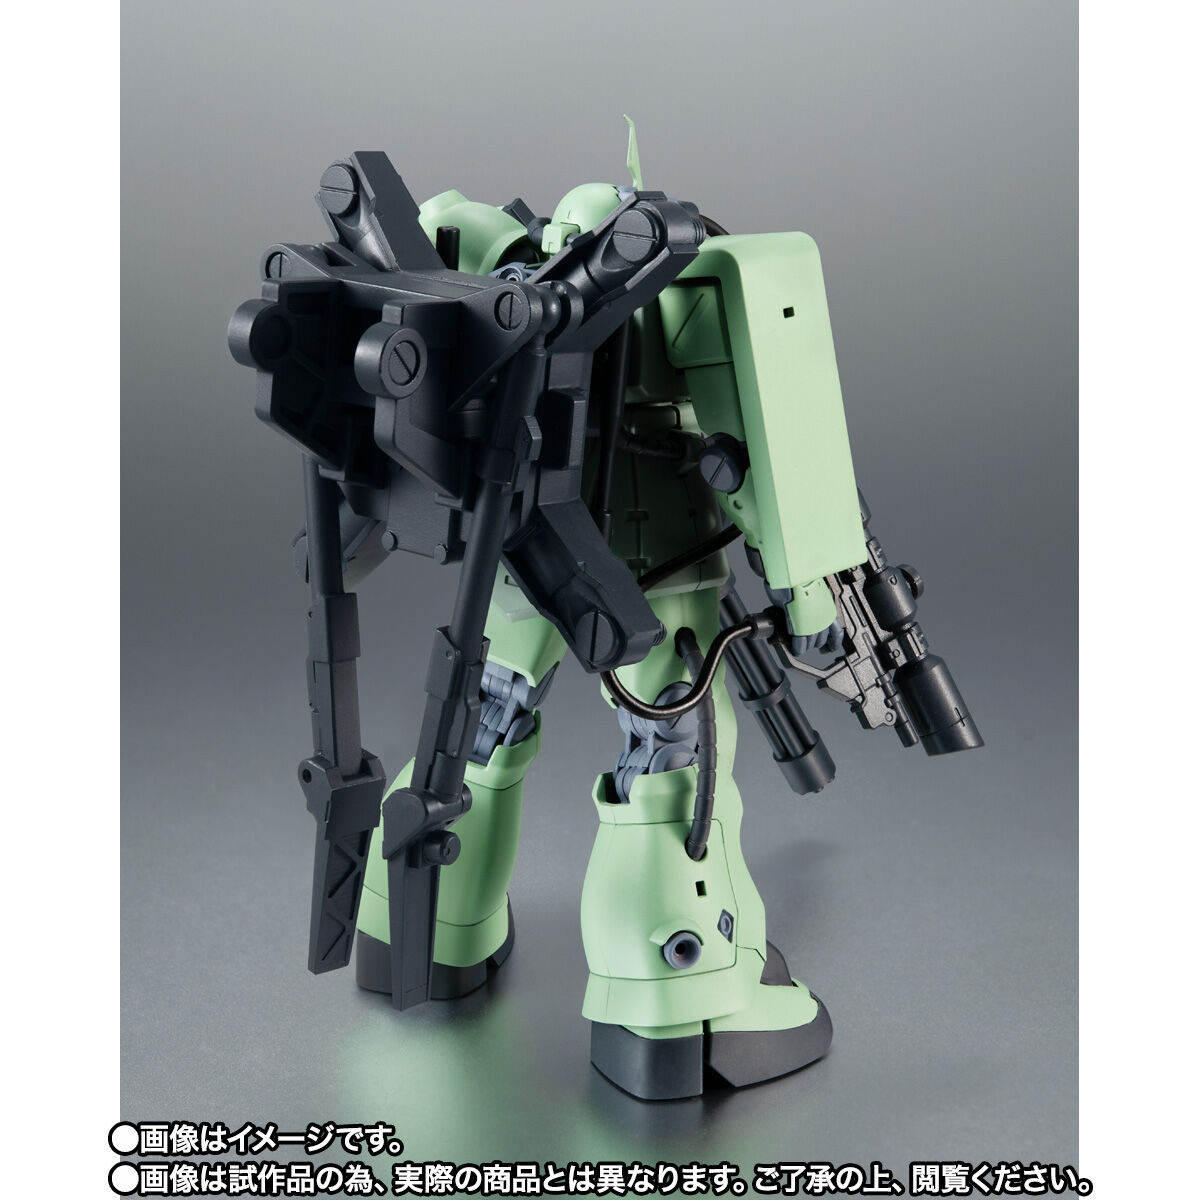 Robot Spirits(Side MS) R-SP MS-06F-2 Zaku Ⅱ F2 Rangefinder Type ver. A.N.I.M.E.